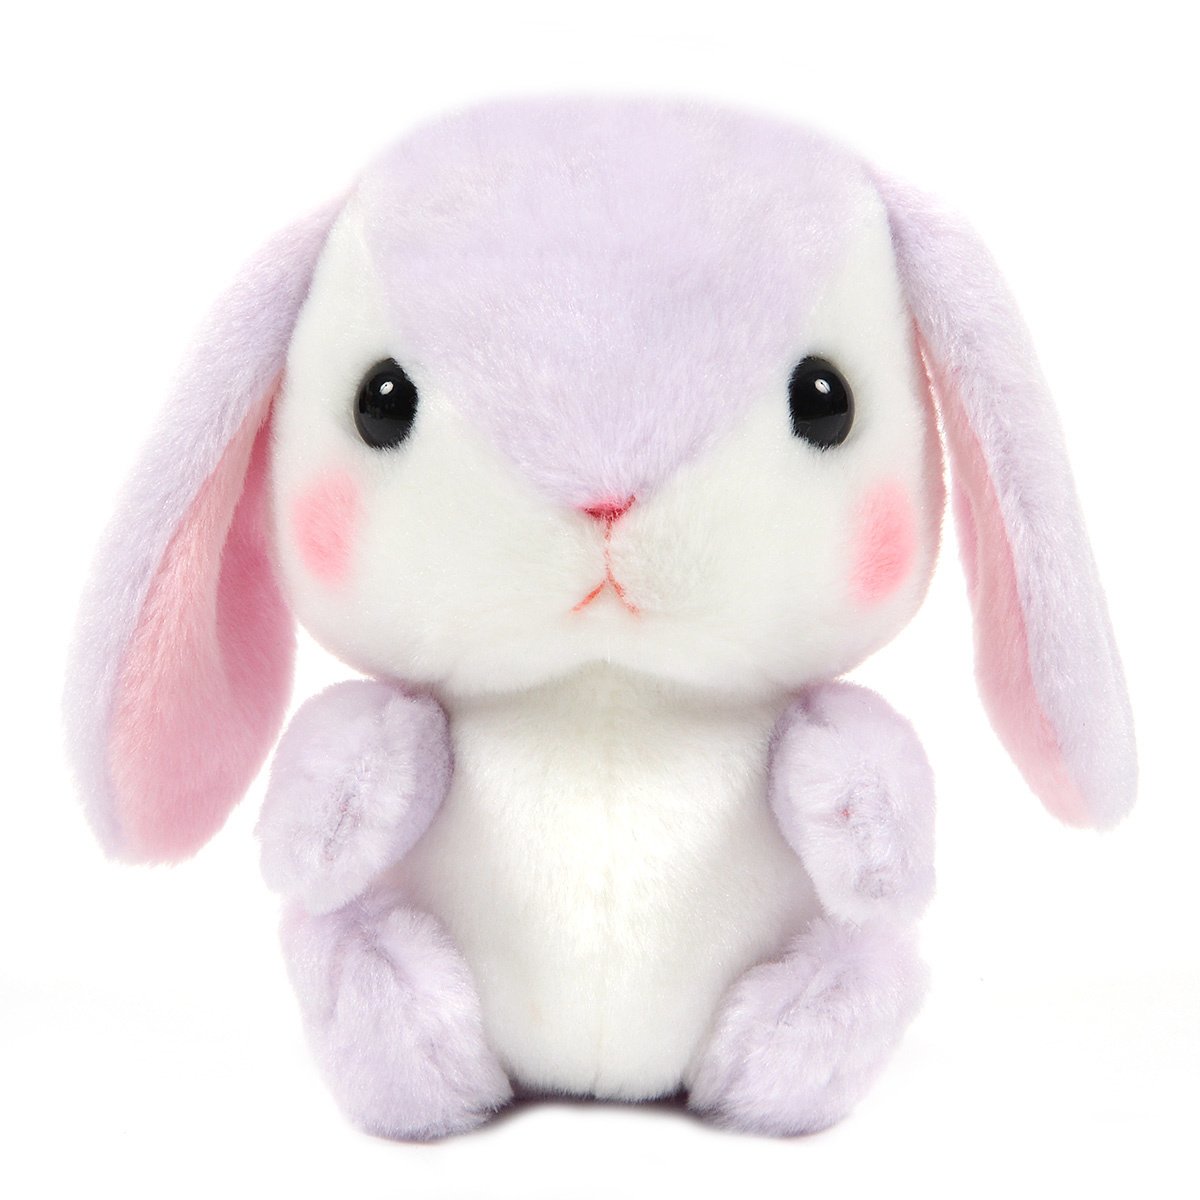 Amuse Bunny Plushie Cute Stuffed Animal Toy Purple / White 6 Inches